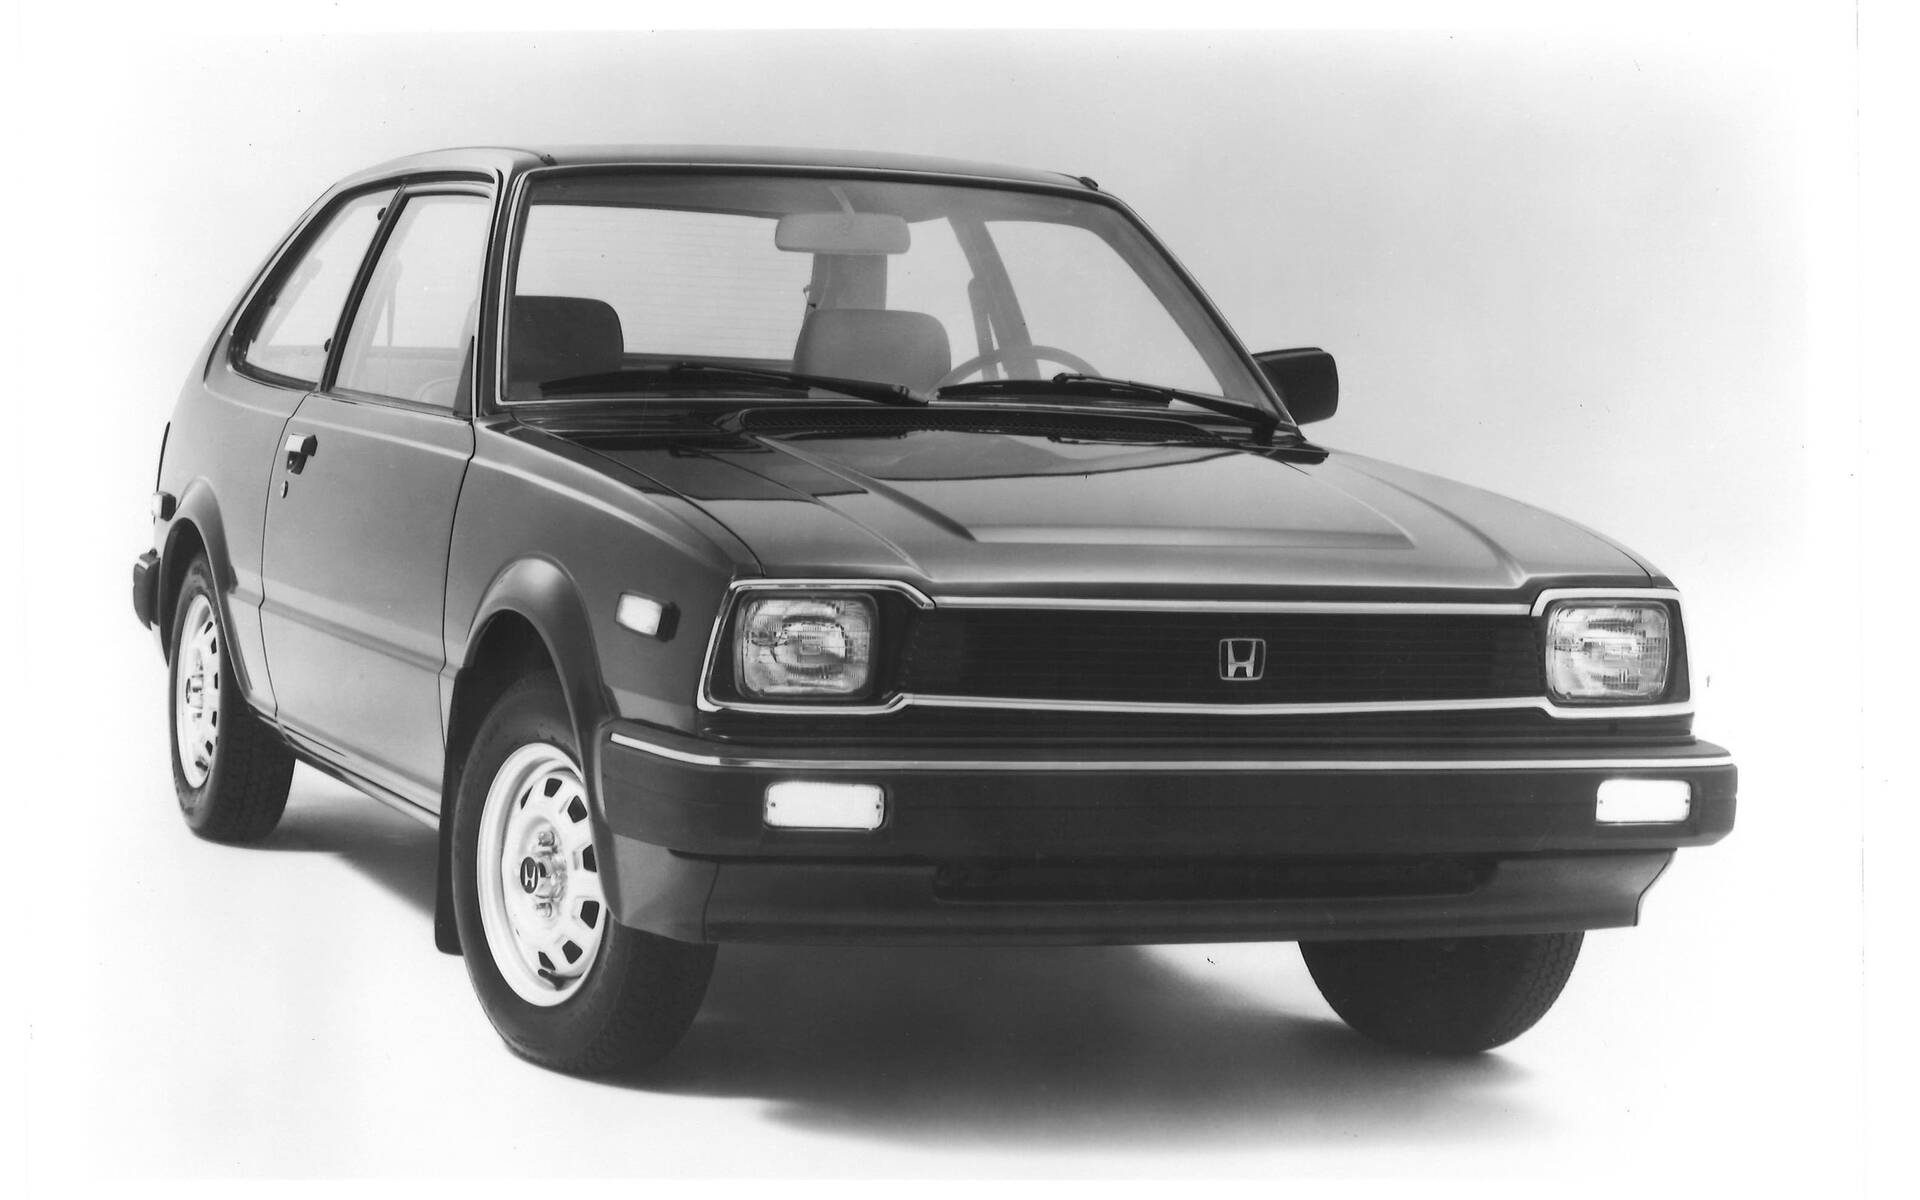 <p>2nd generation - 1980 Honda Civic Hatchback</p>